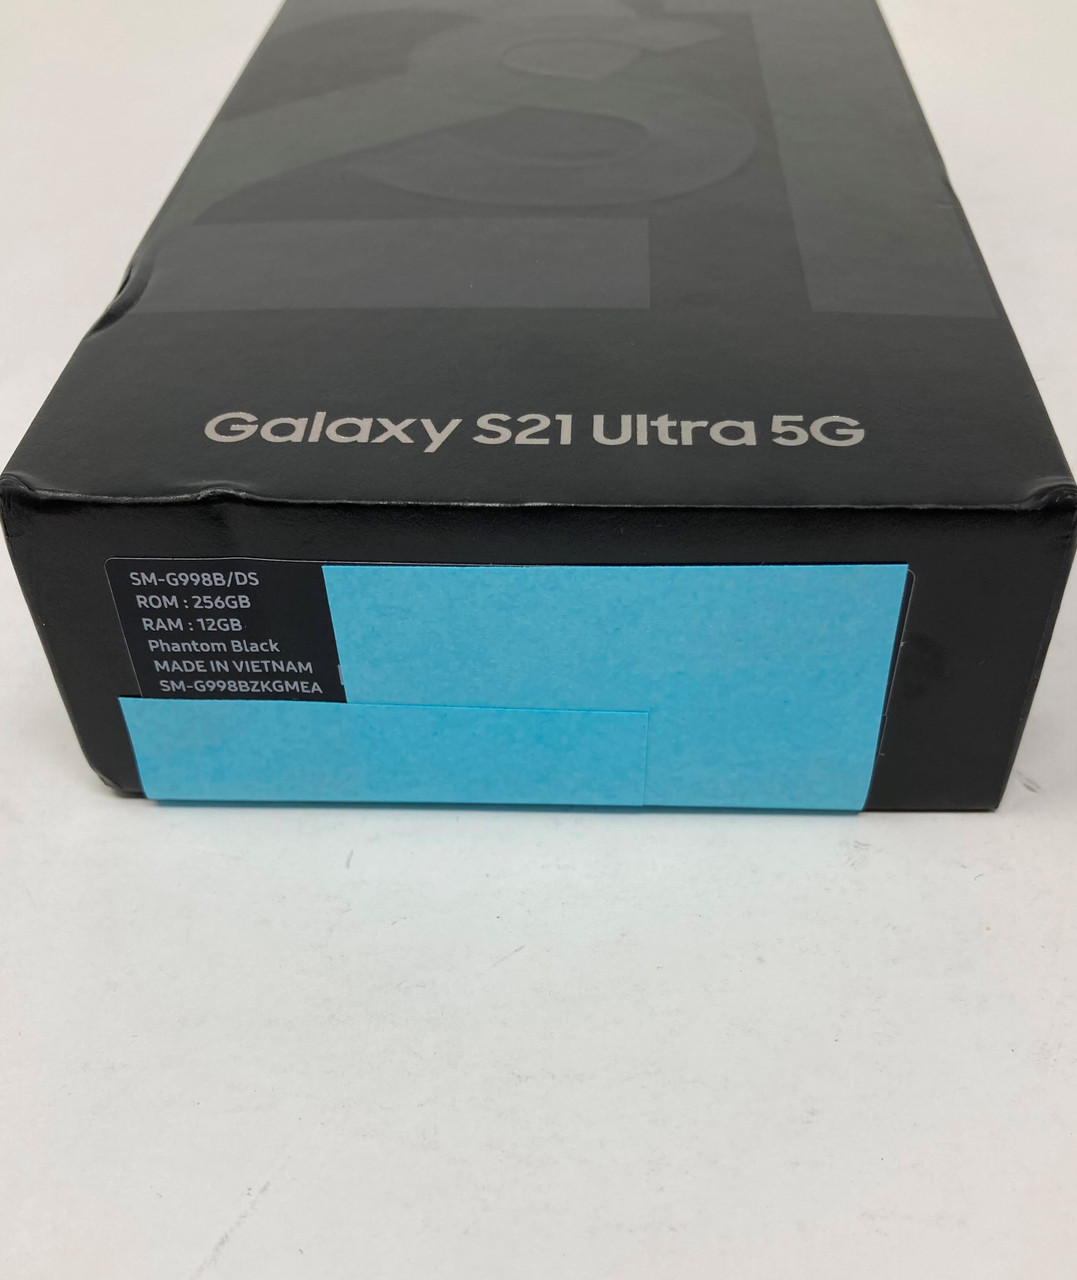 Galaxy S21 Ultra 5G (Phantom Black, 256GB)